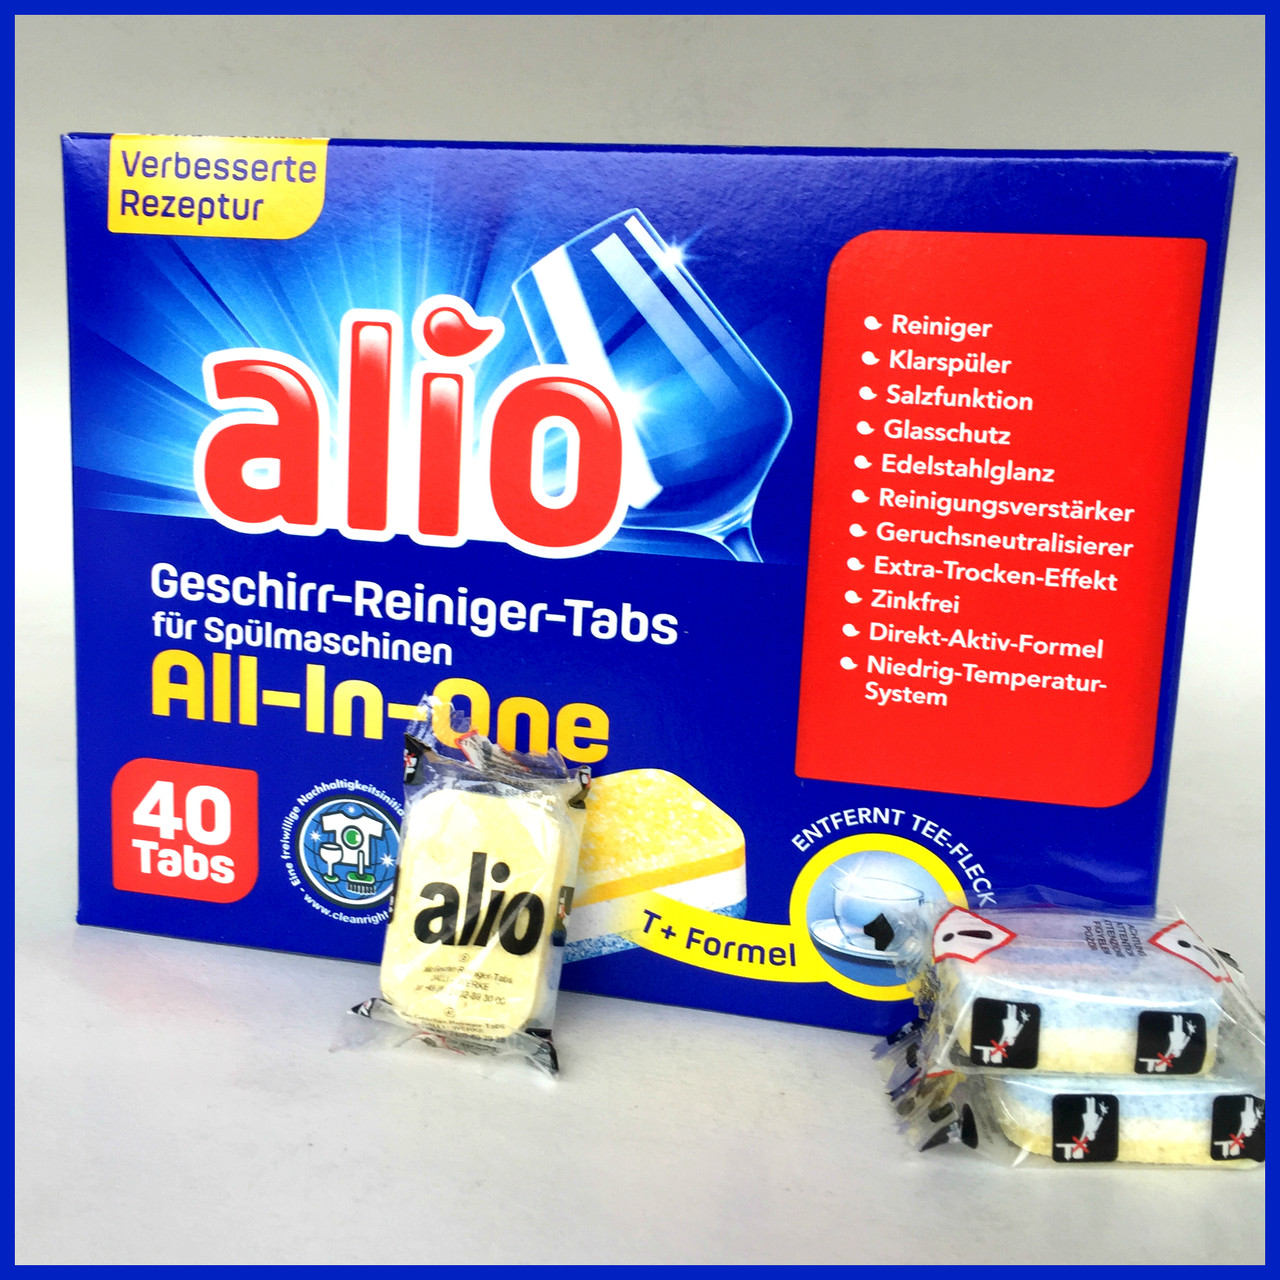 Капсулы для посуды All in One Alio Geschirr-reiniger-tabs complete 40 шт,  цена 100 грн. - Prom.ua (ID#1292813388)